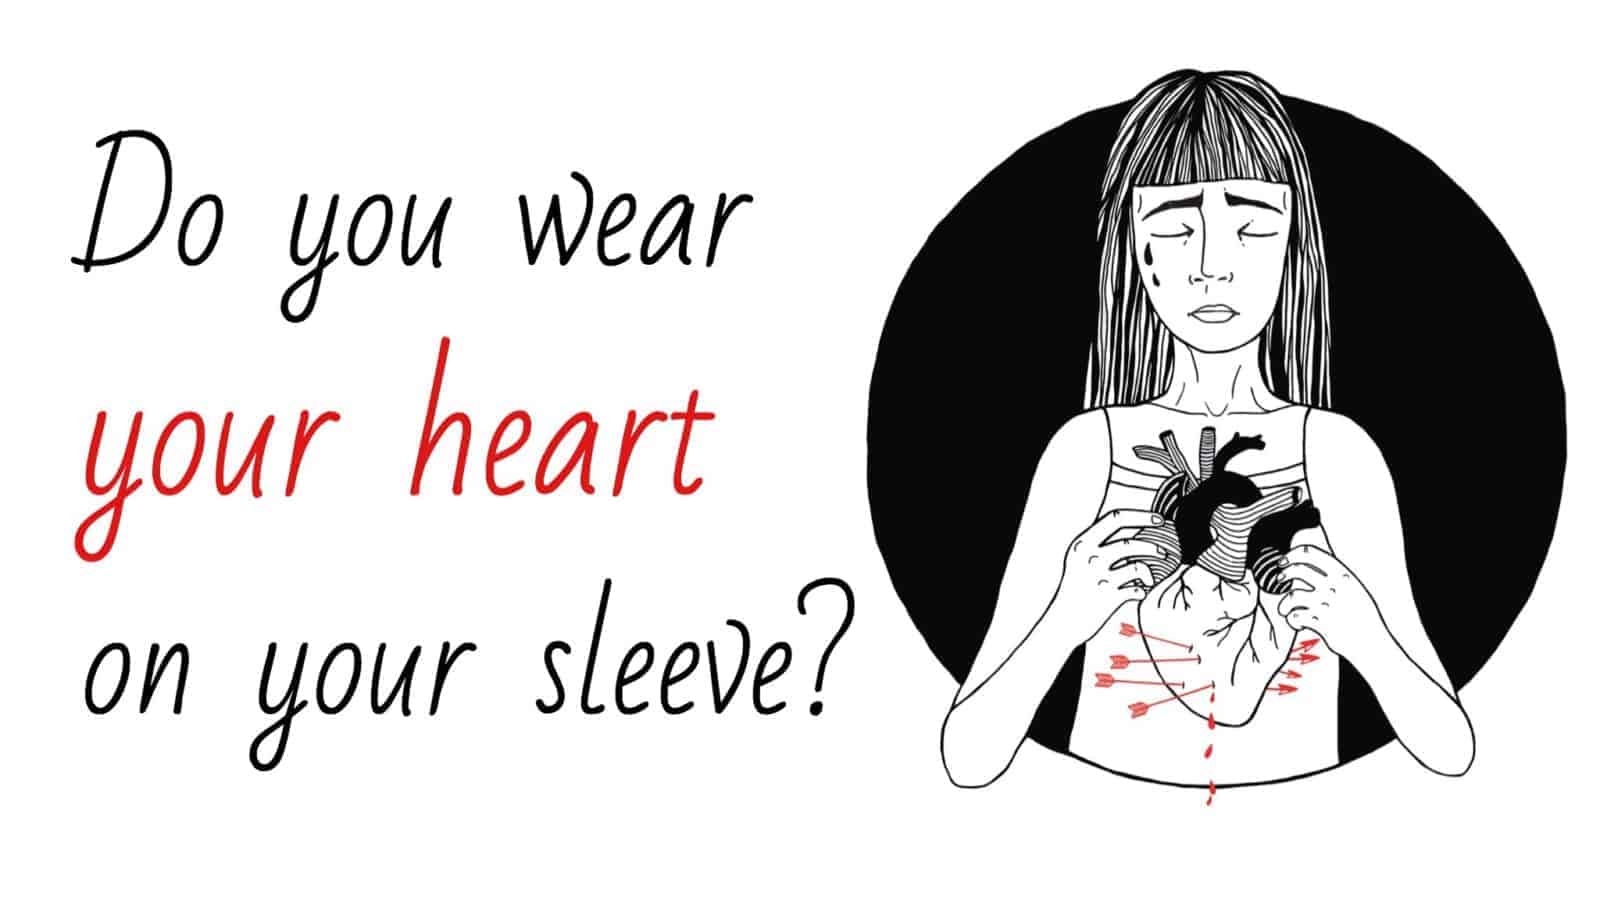 heart on your sleeve